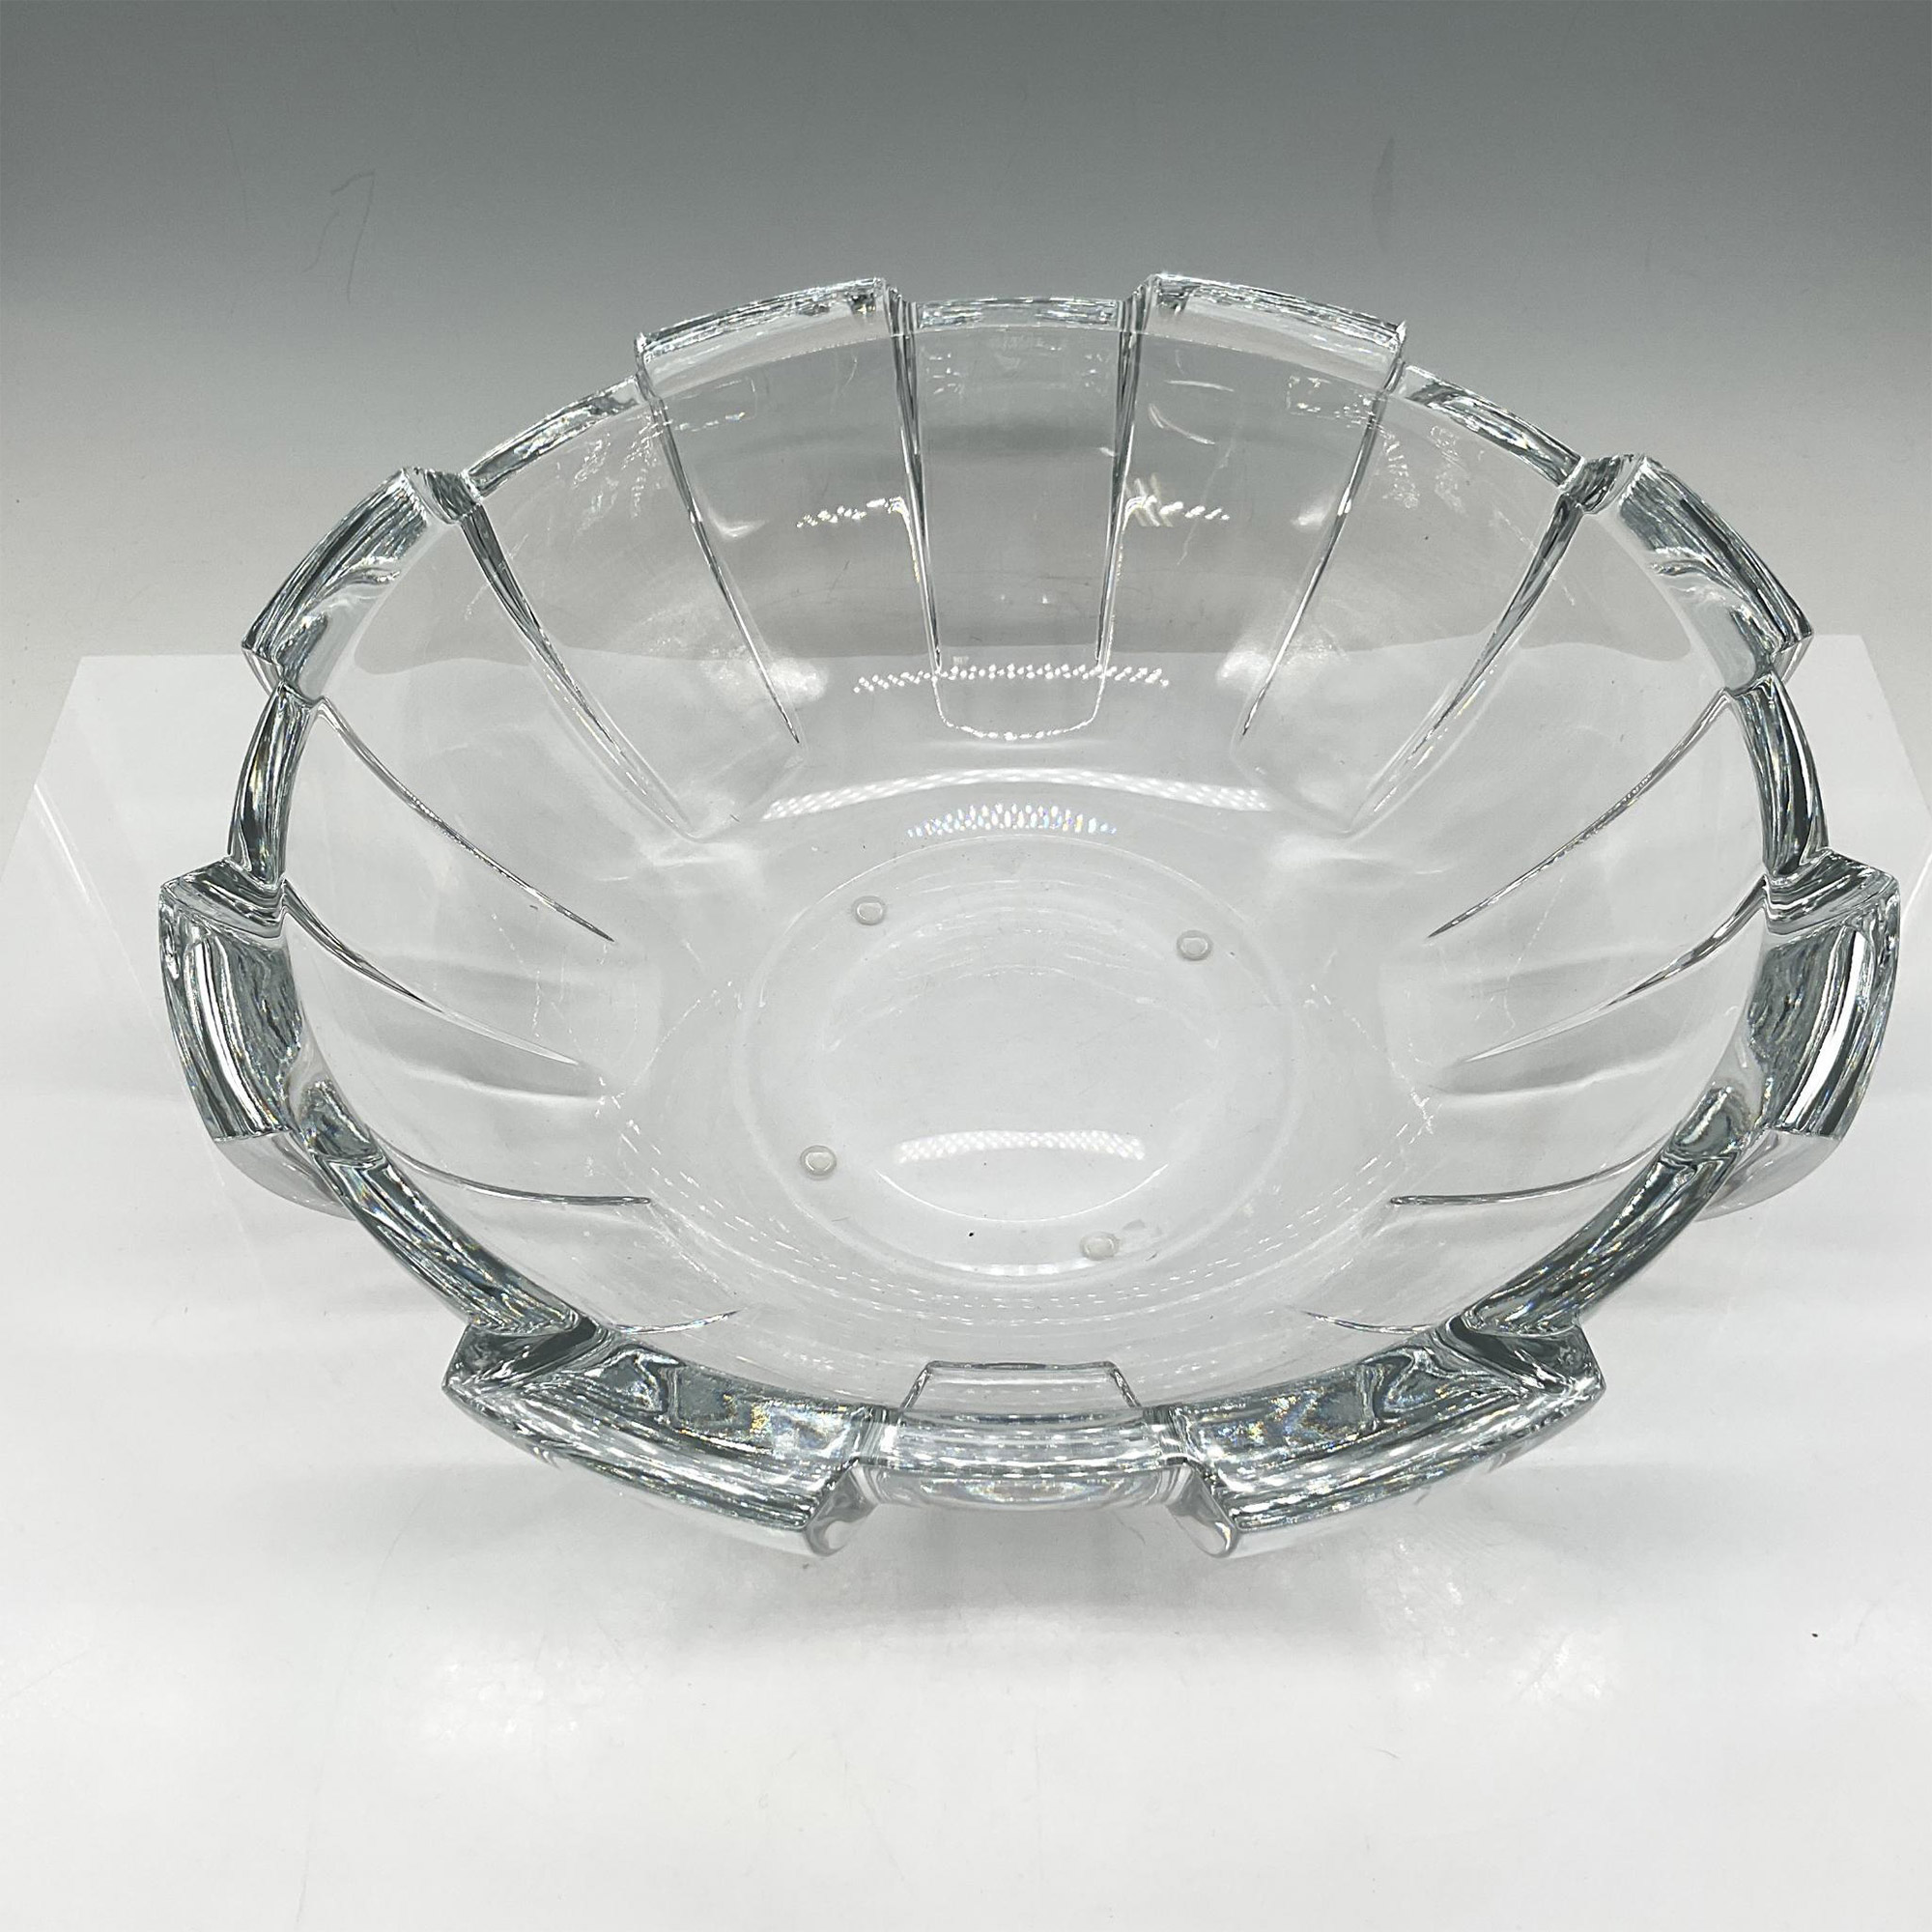 Orrefors Crystal Centerpiece Bowl, Revolution 12" - Image 2 of 4